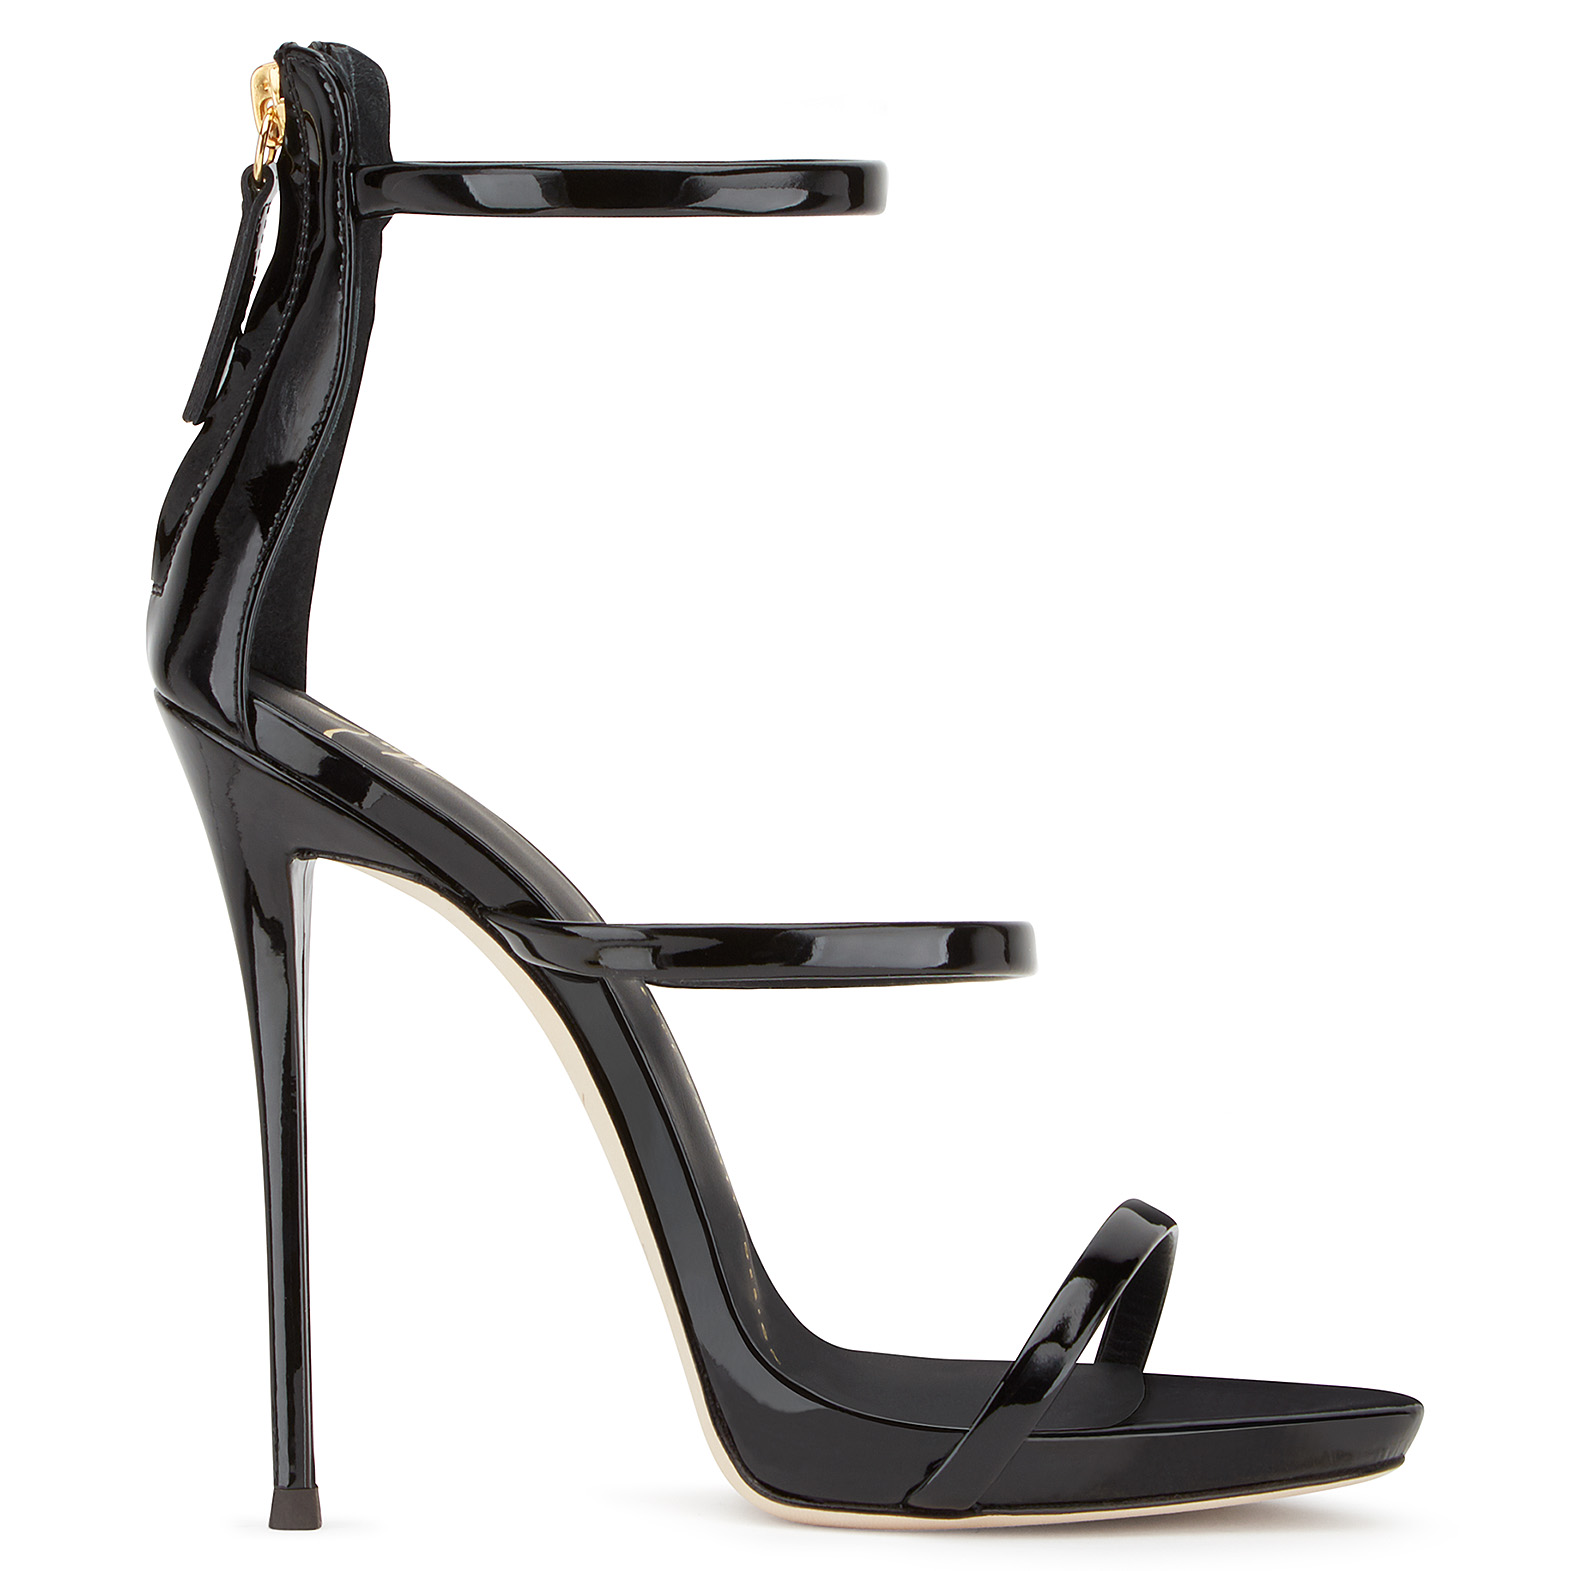 Heidi Klum shoes | Women's designer shoes by Giuseppe Zanotti